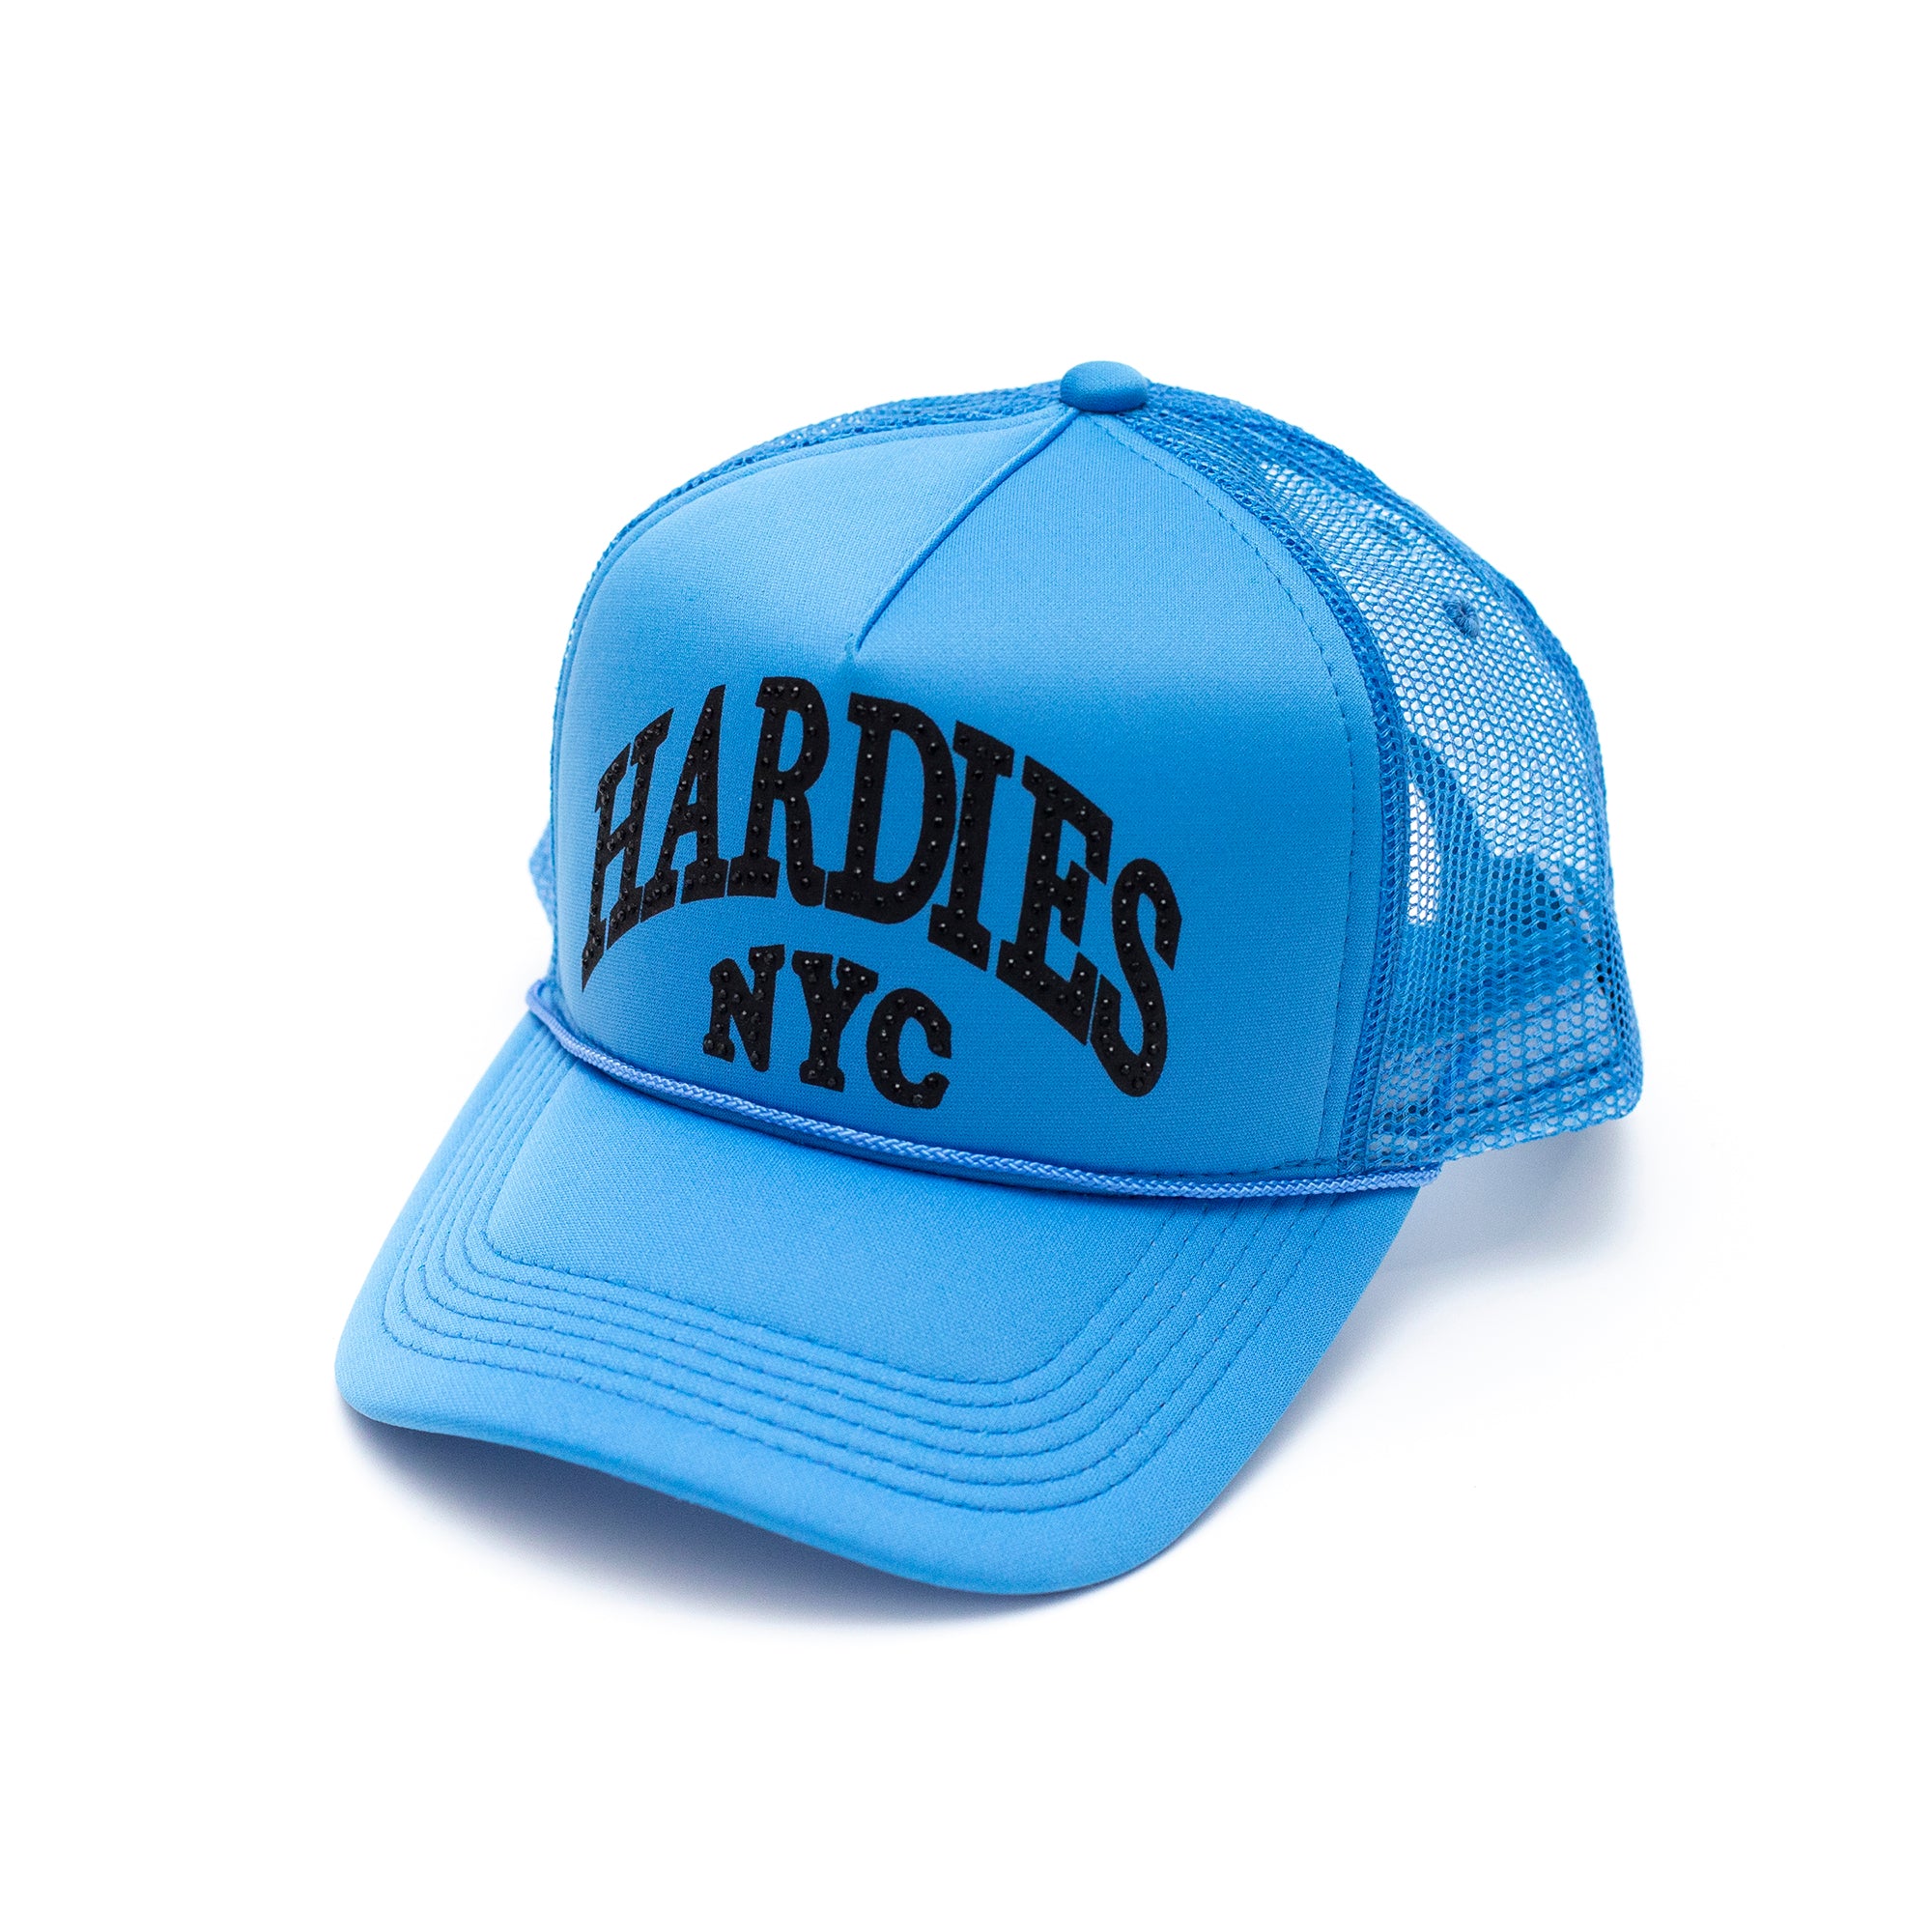 NYC rhinestone pre curve trucker hat blue